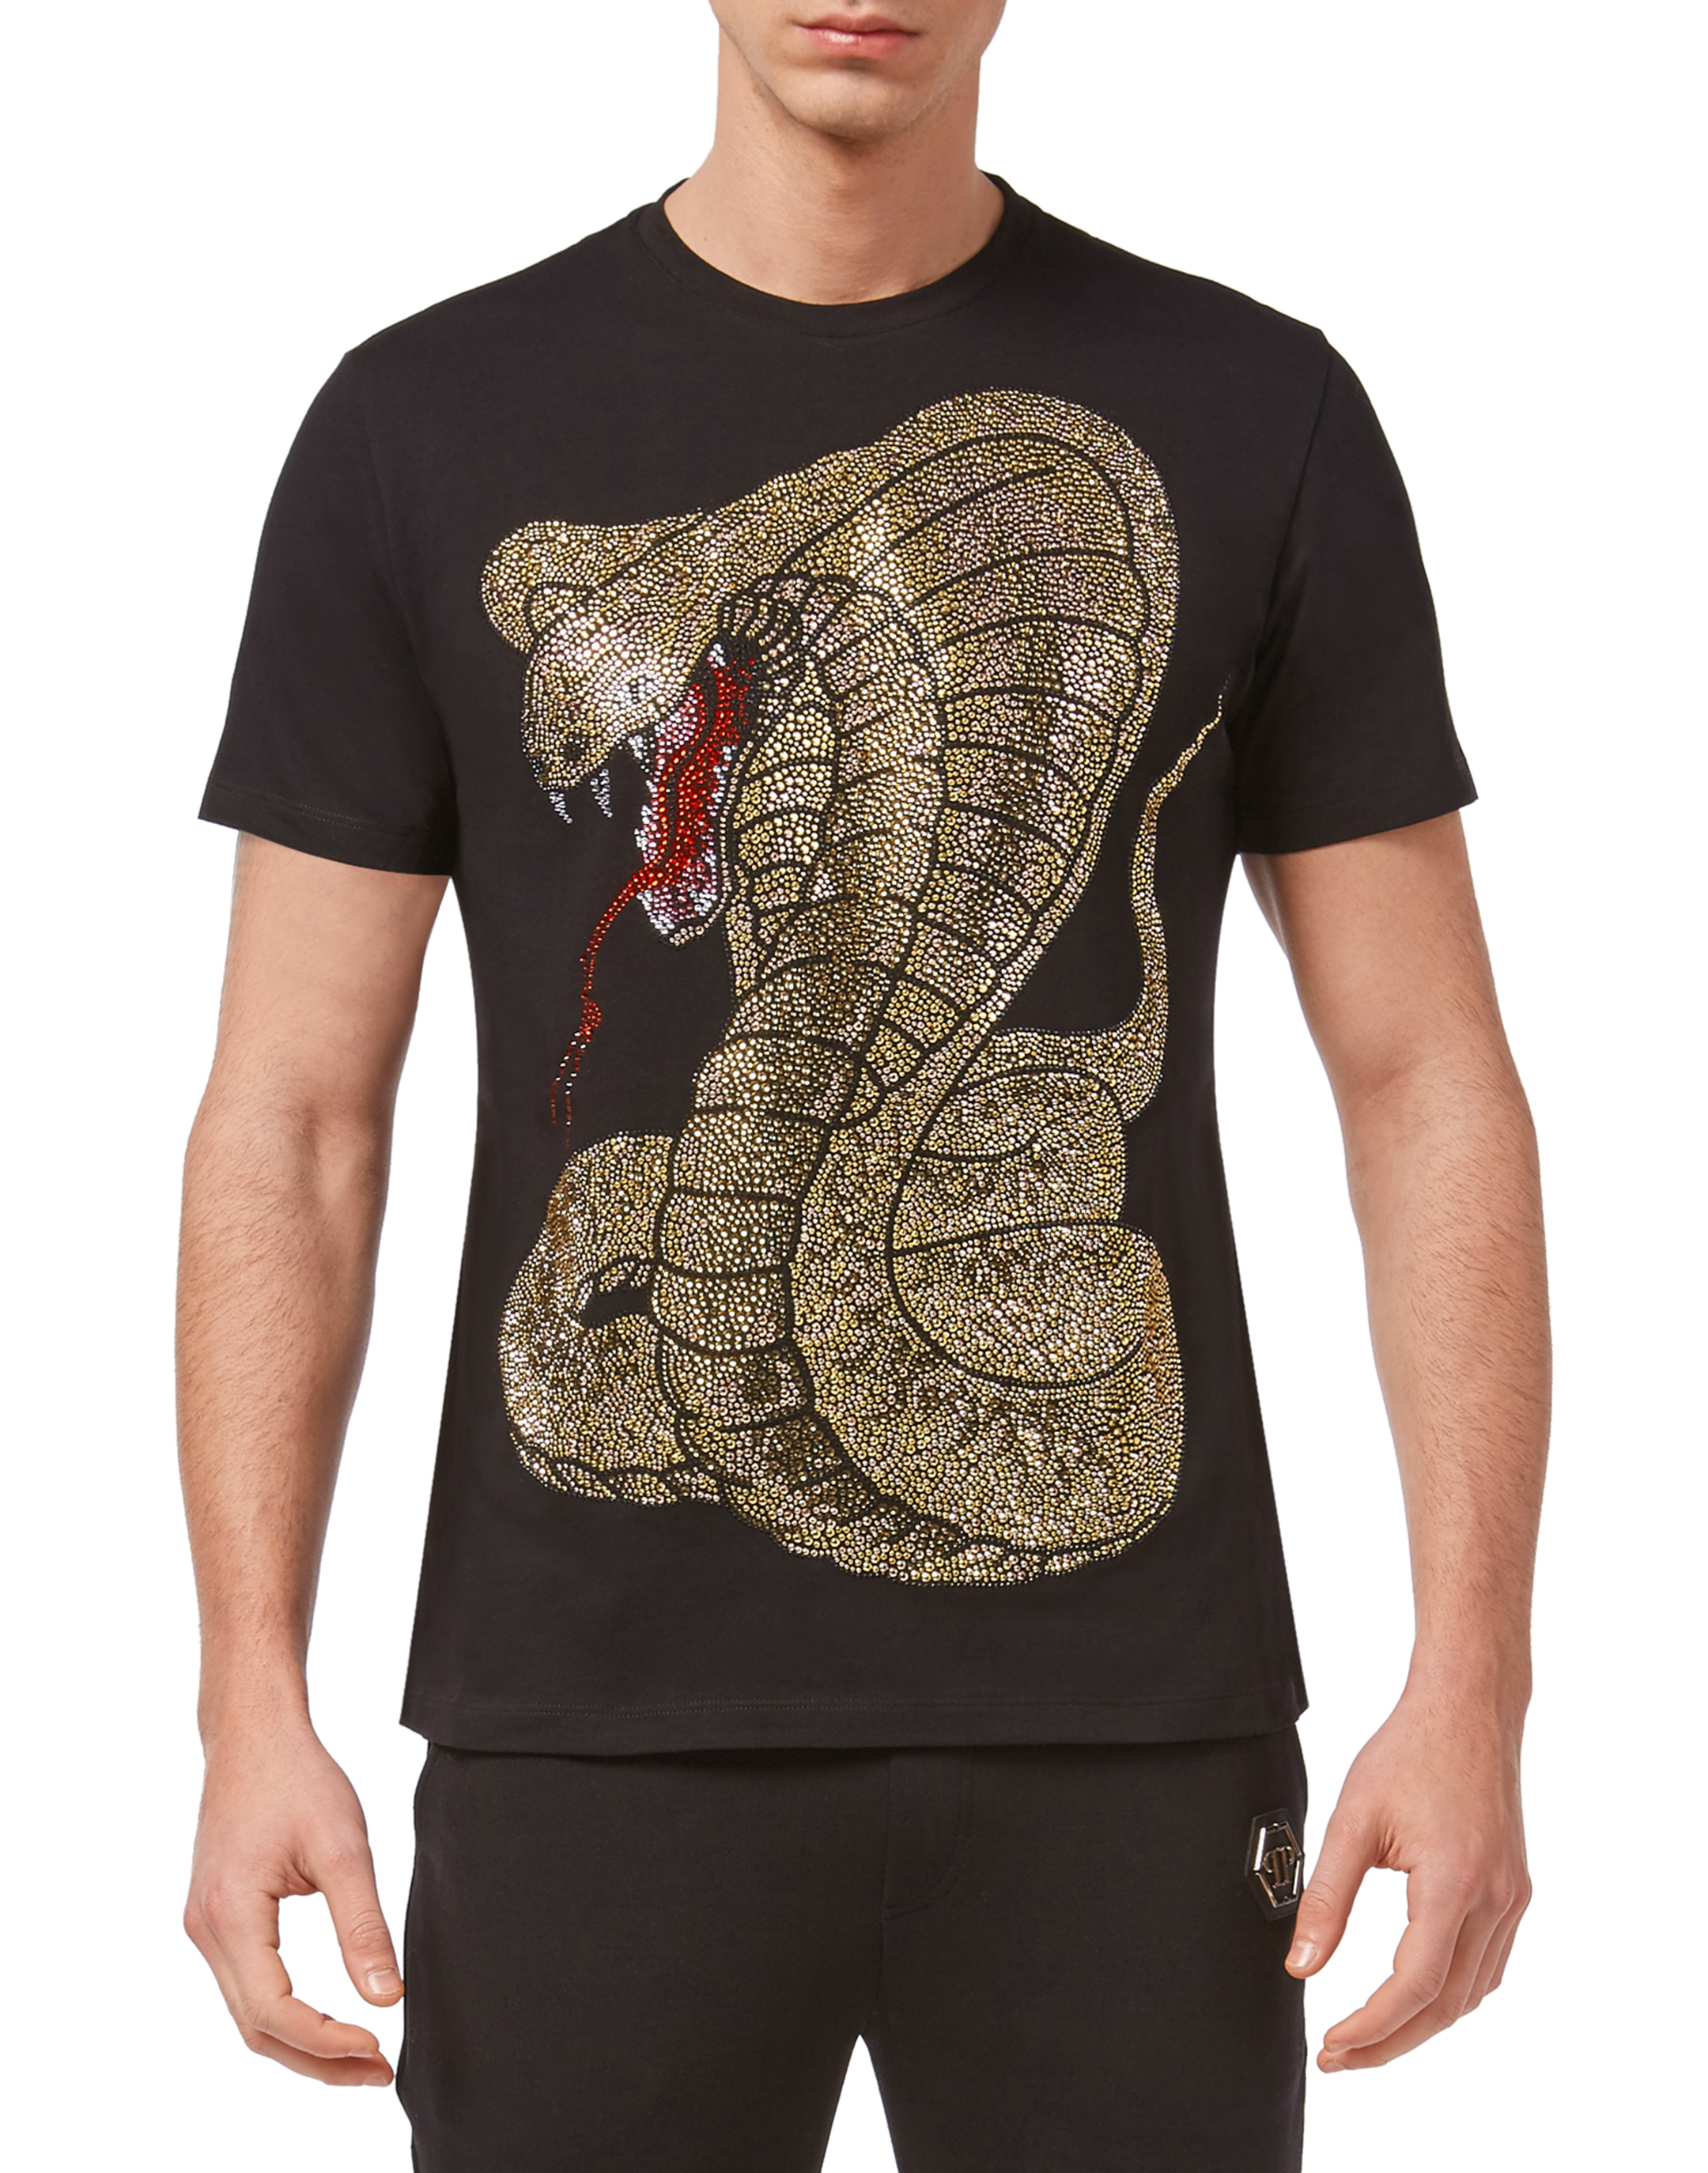 philipp plein snake t shirt